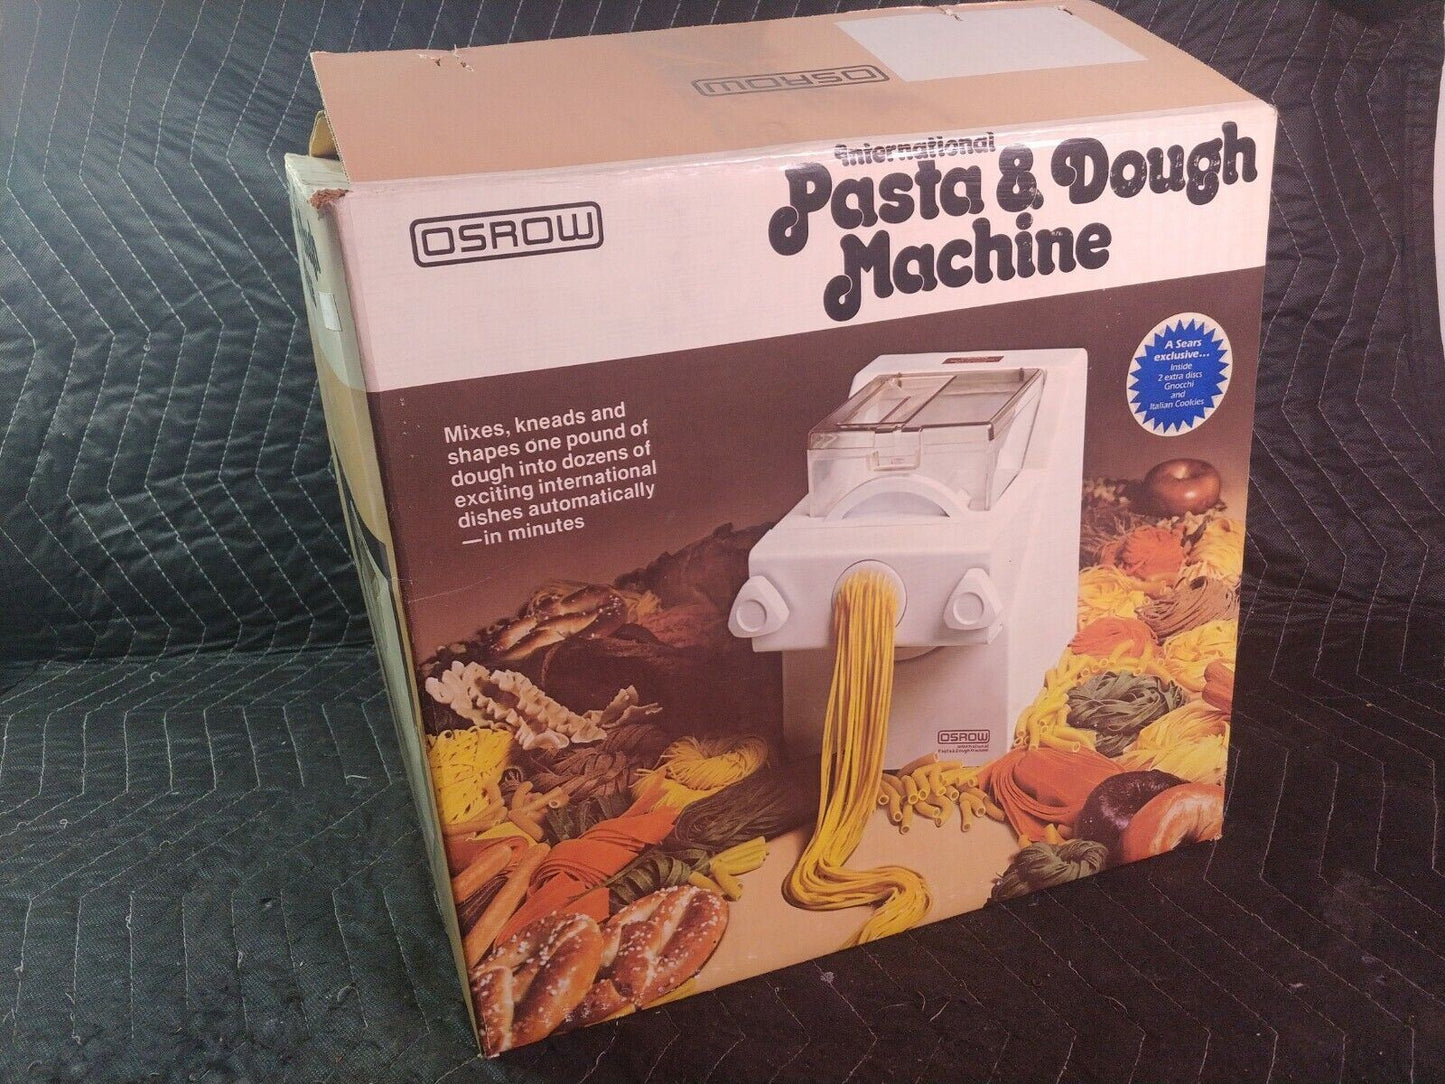 Vintage OSROW Pasta & Dough Machine Electric Automatic - X700